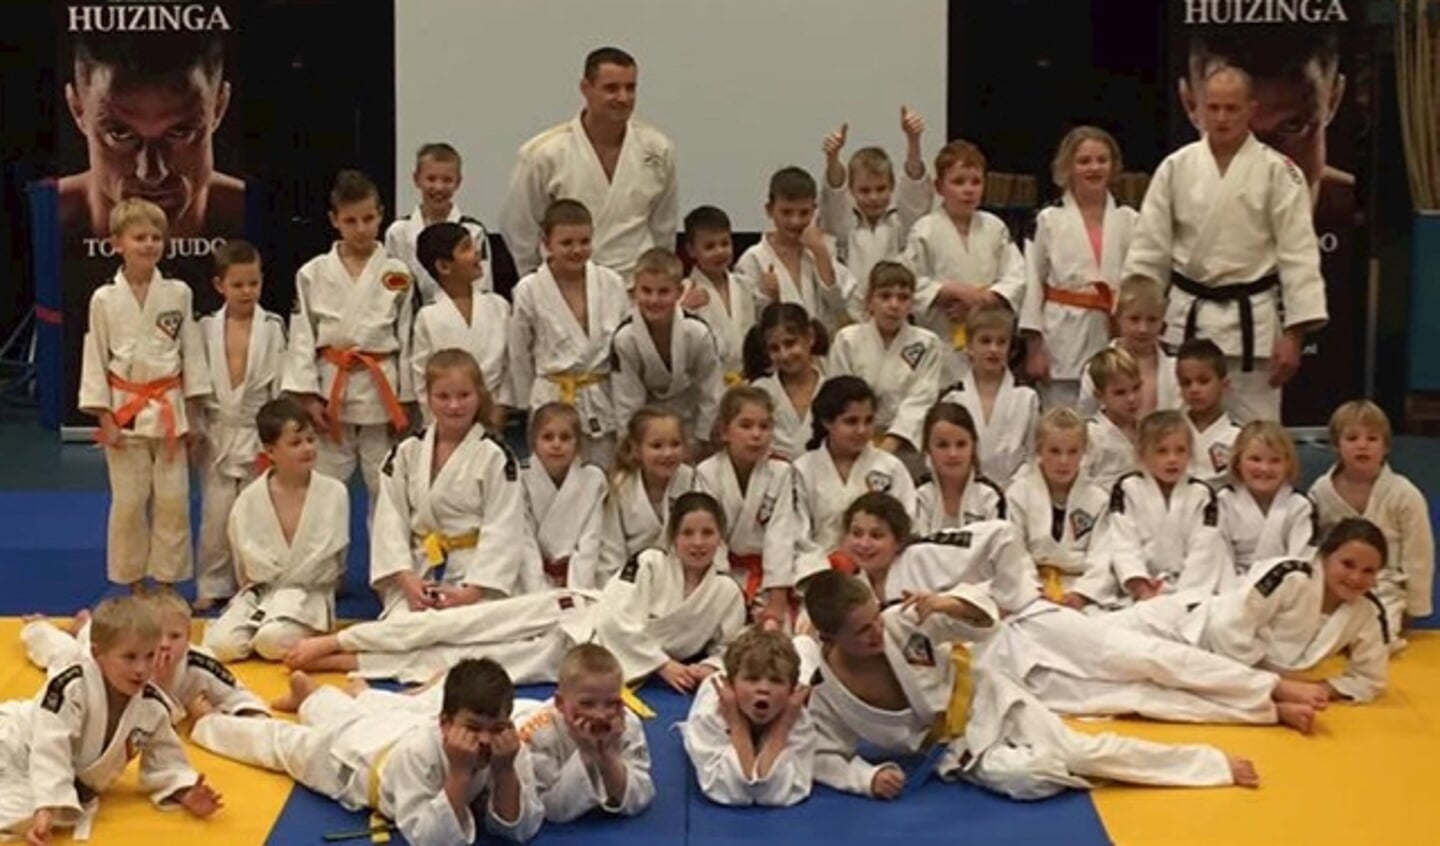  Mark Huizinga met de judojeugd uit Swifterbant.